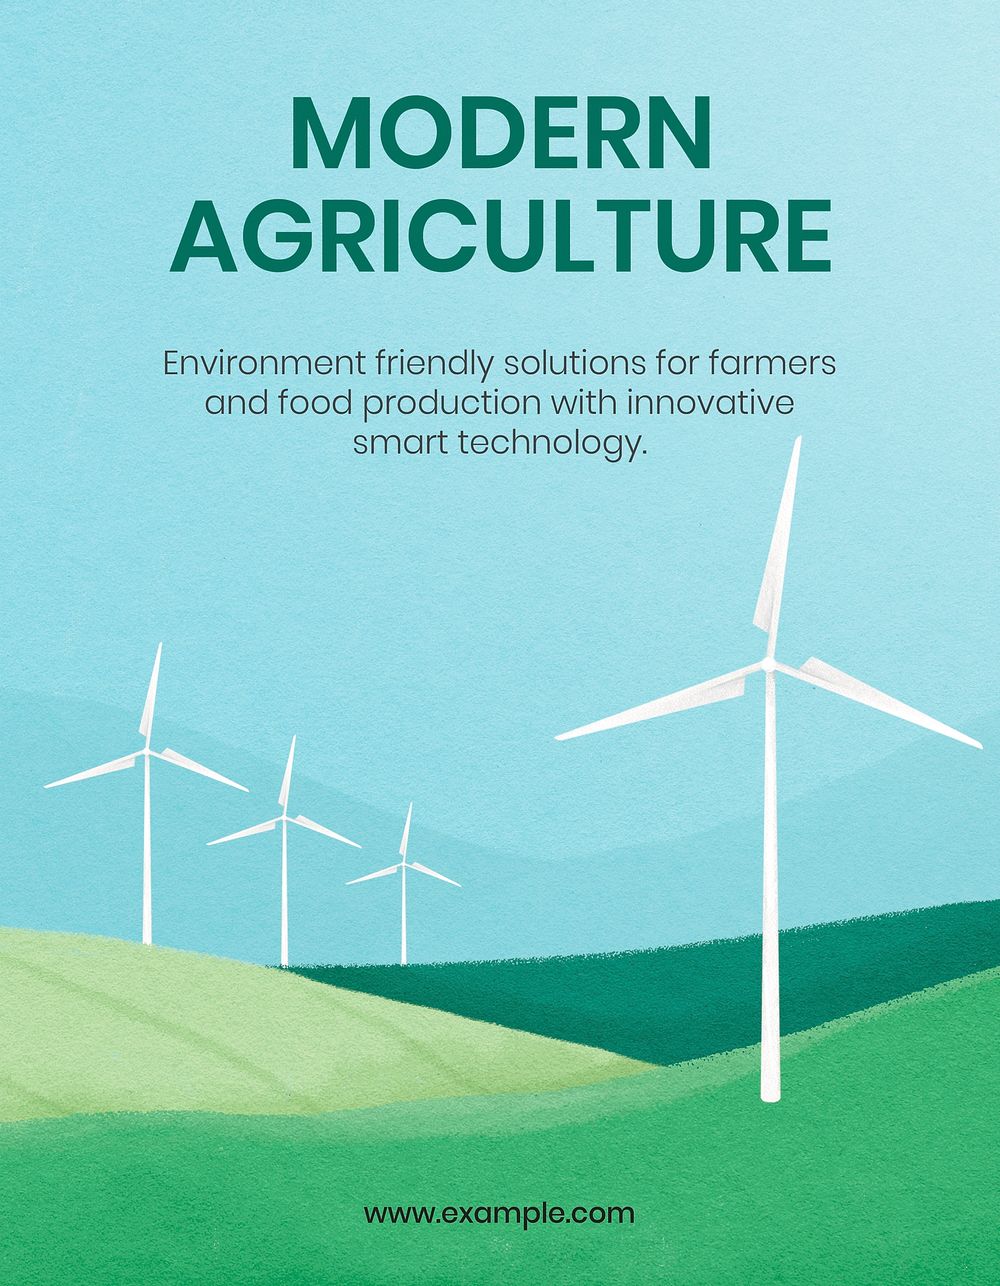 Modern agriculture flyer template, wind farm illustration psd